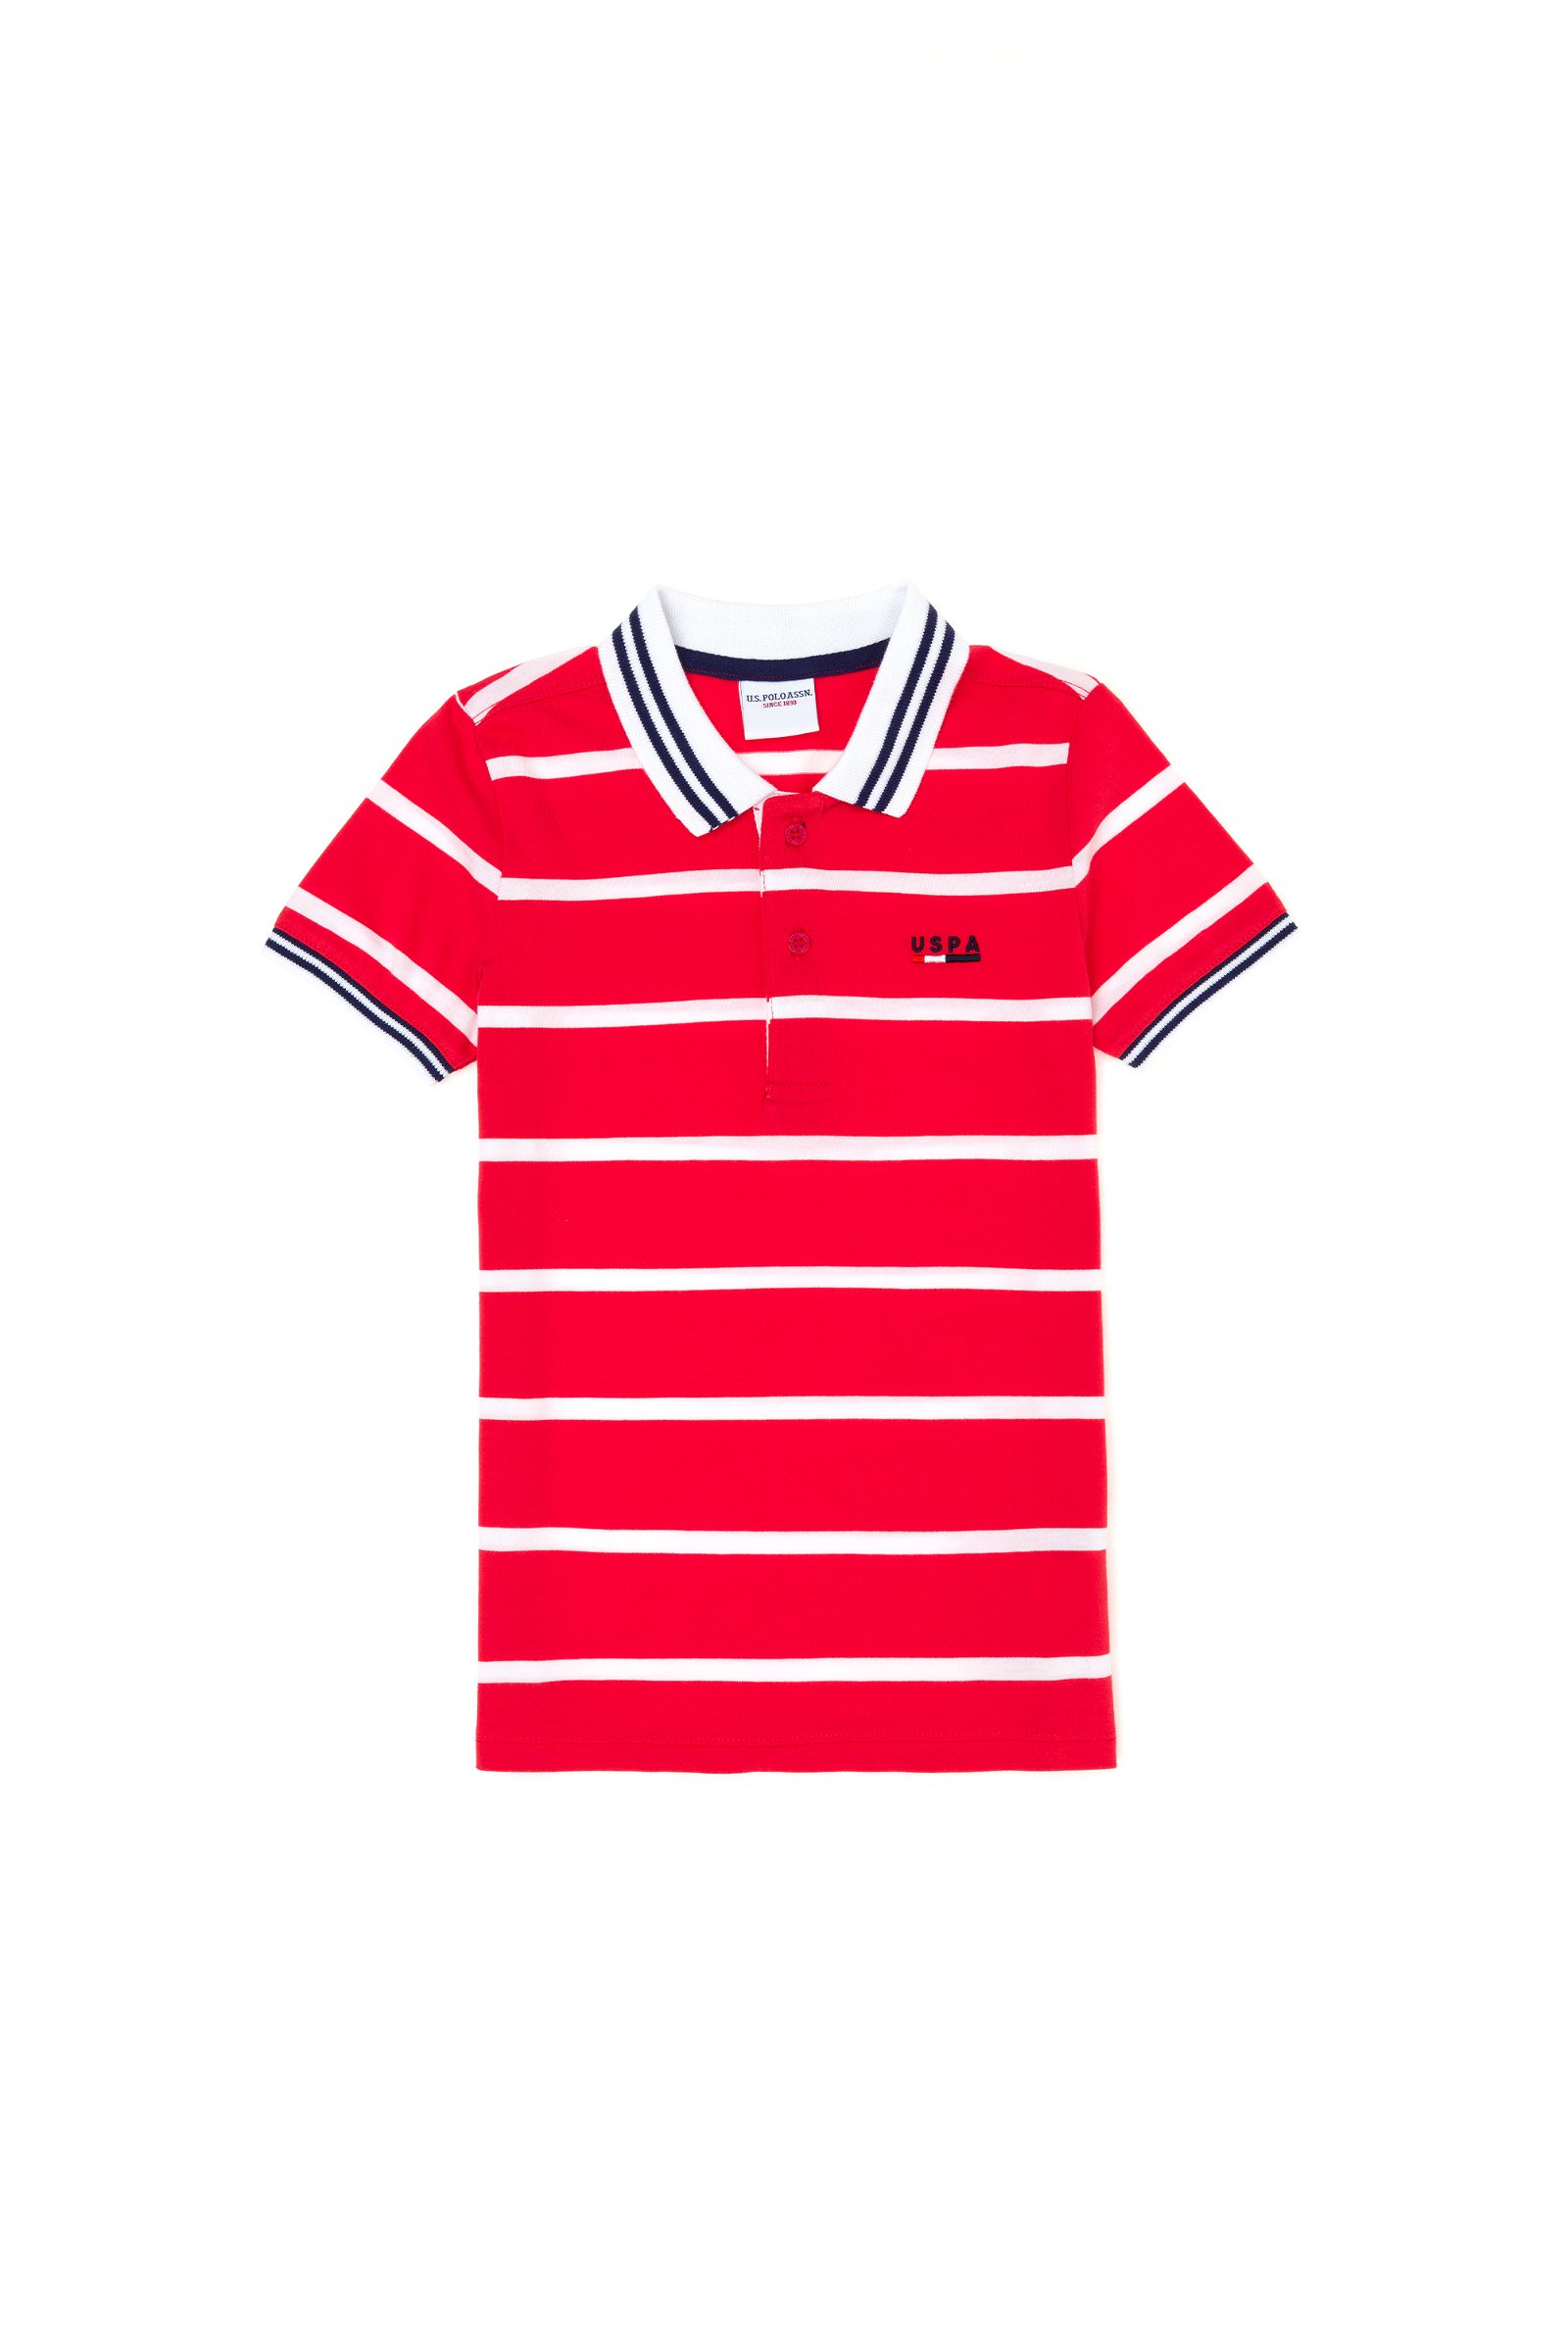 تی شرت یقه پولو قرمز  استاندارد فیت  پسرانه یو اس پولو | US POLO ASSN